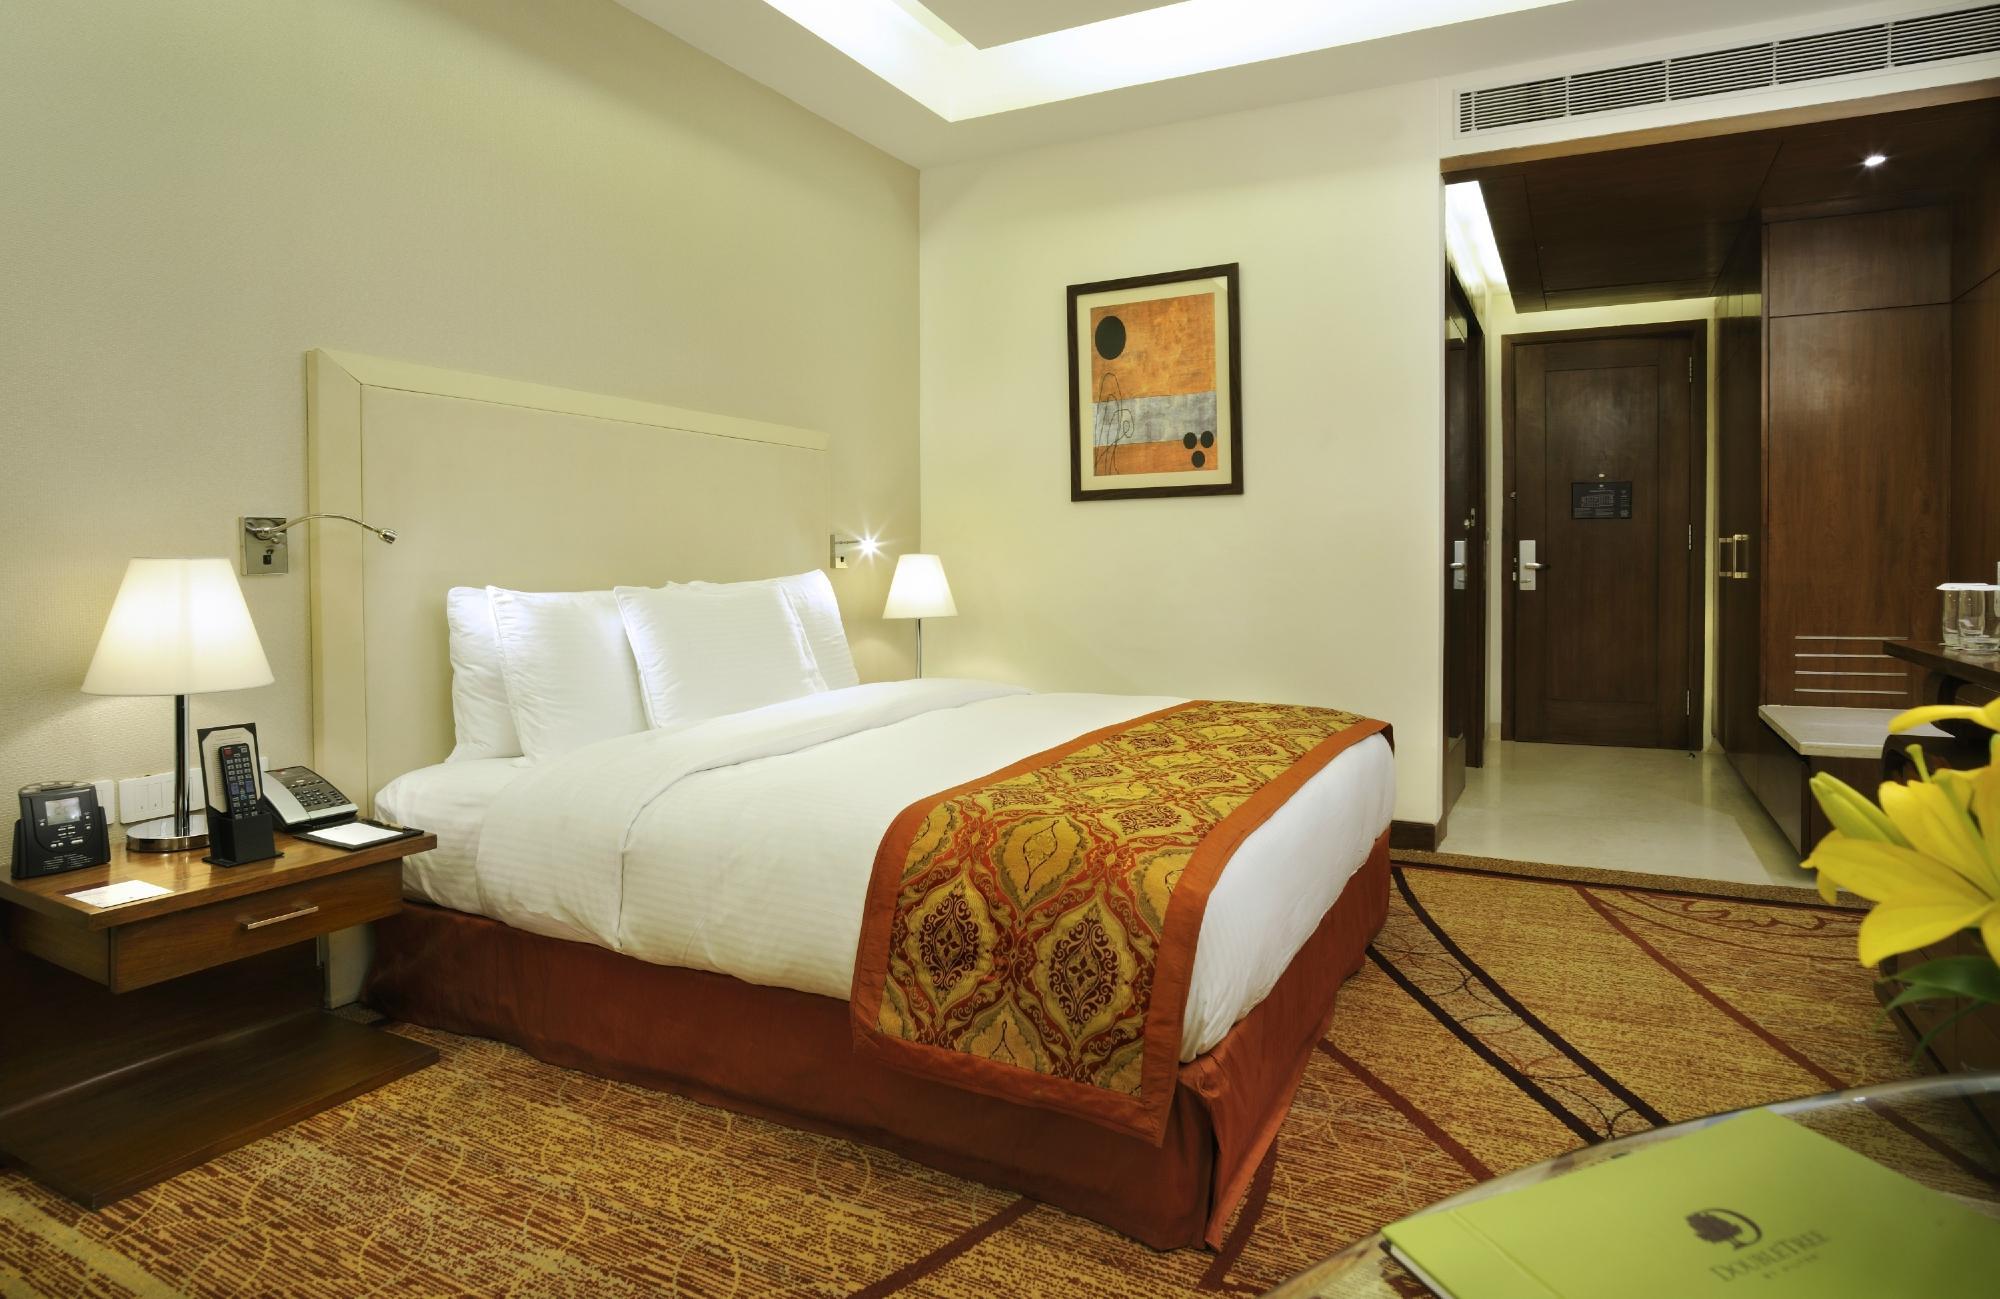 Photo of DoubleTree by Hilton Hotel Gurgaon - New Delhi NCR, Gurgaon, India